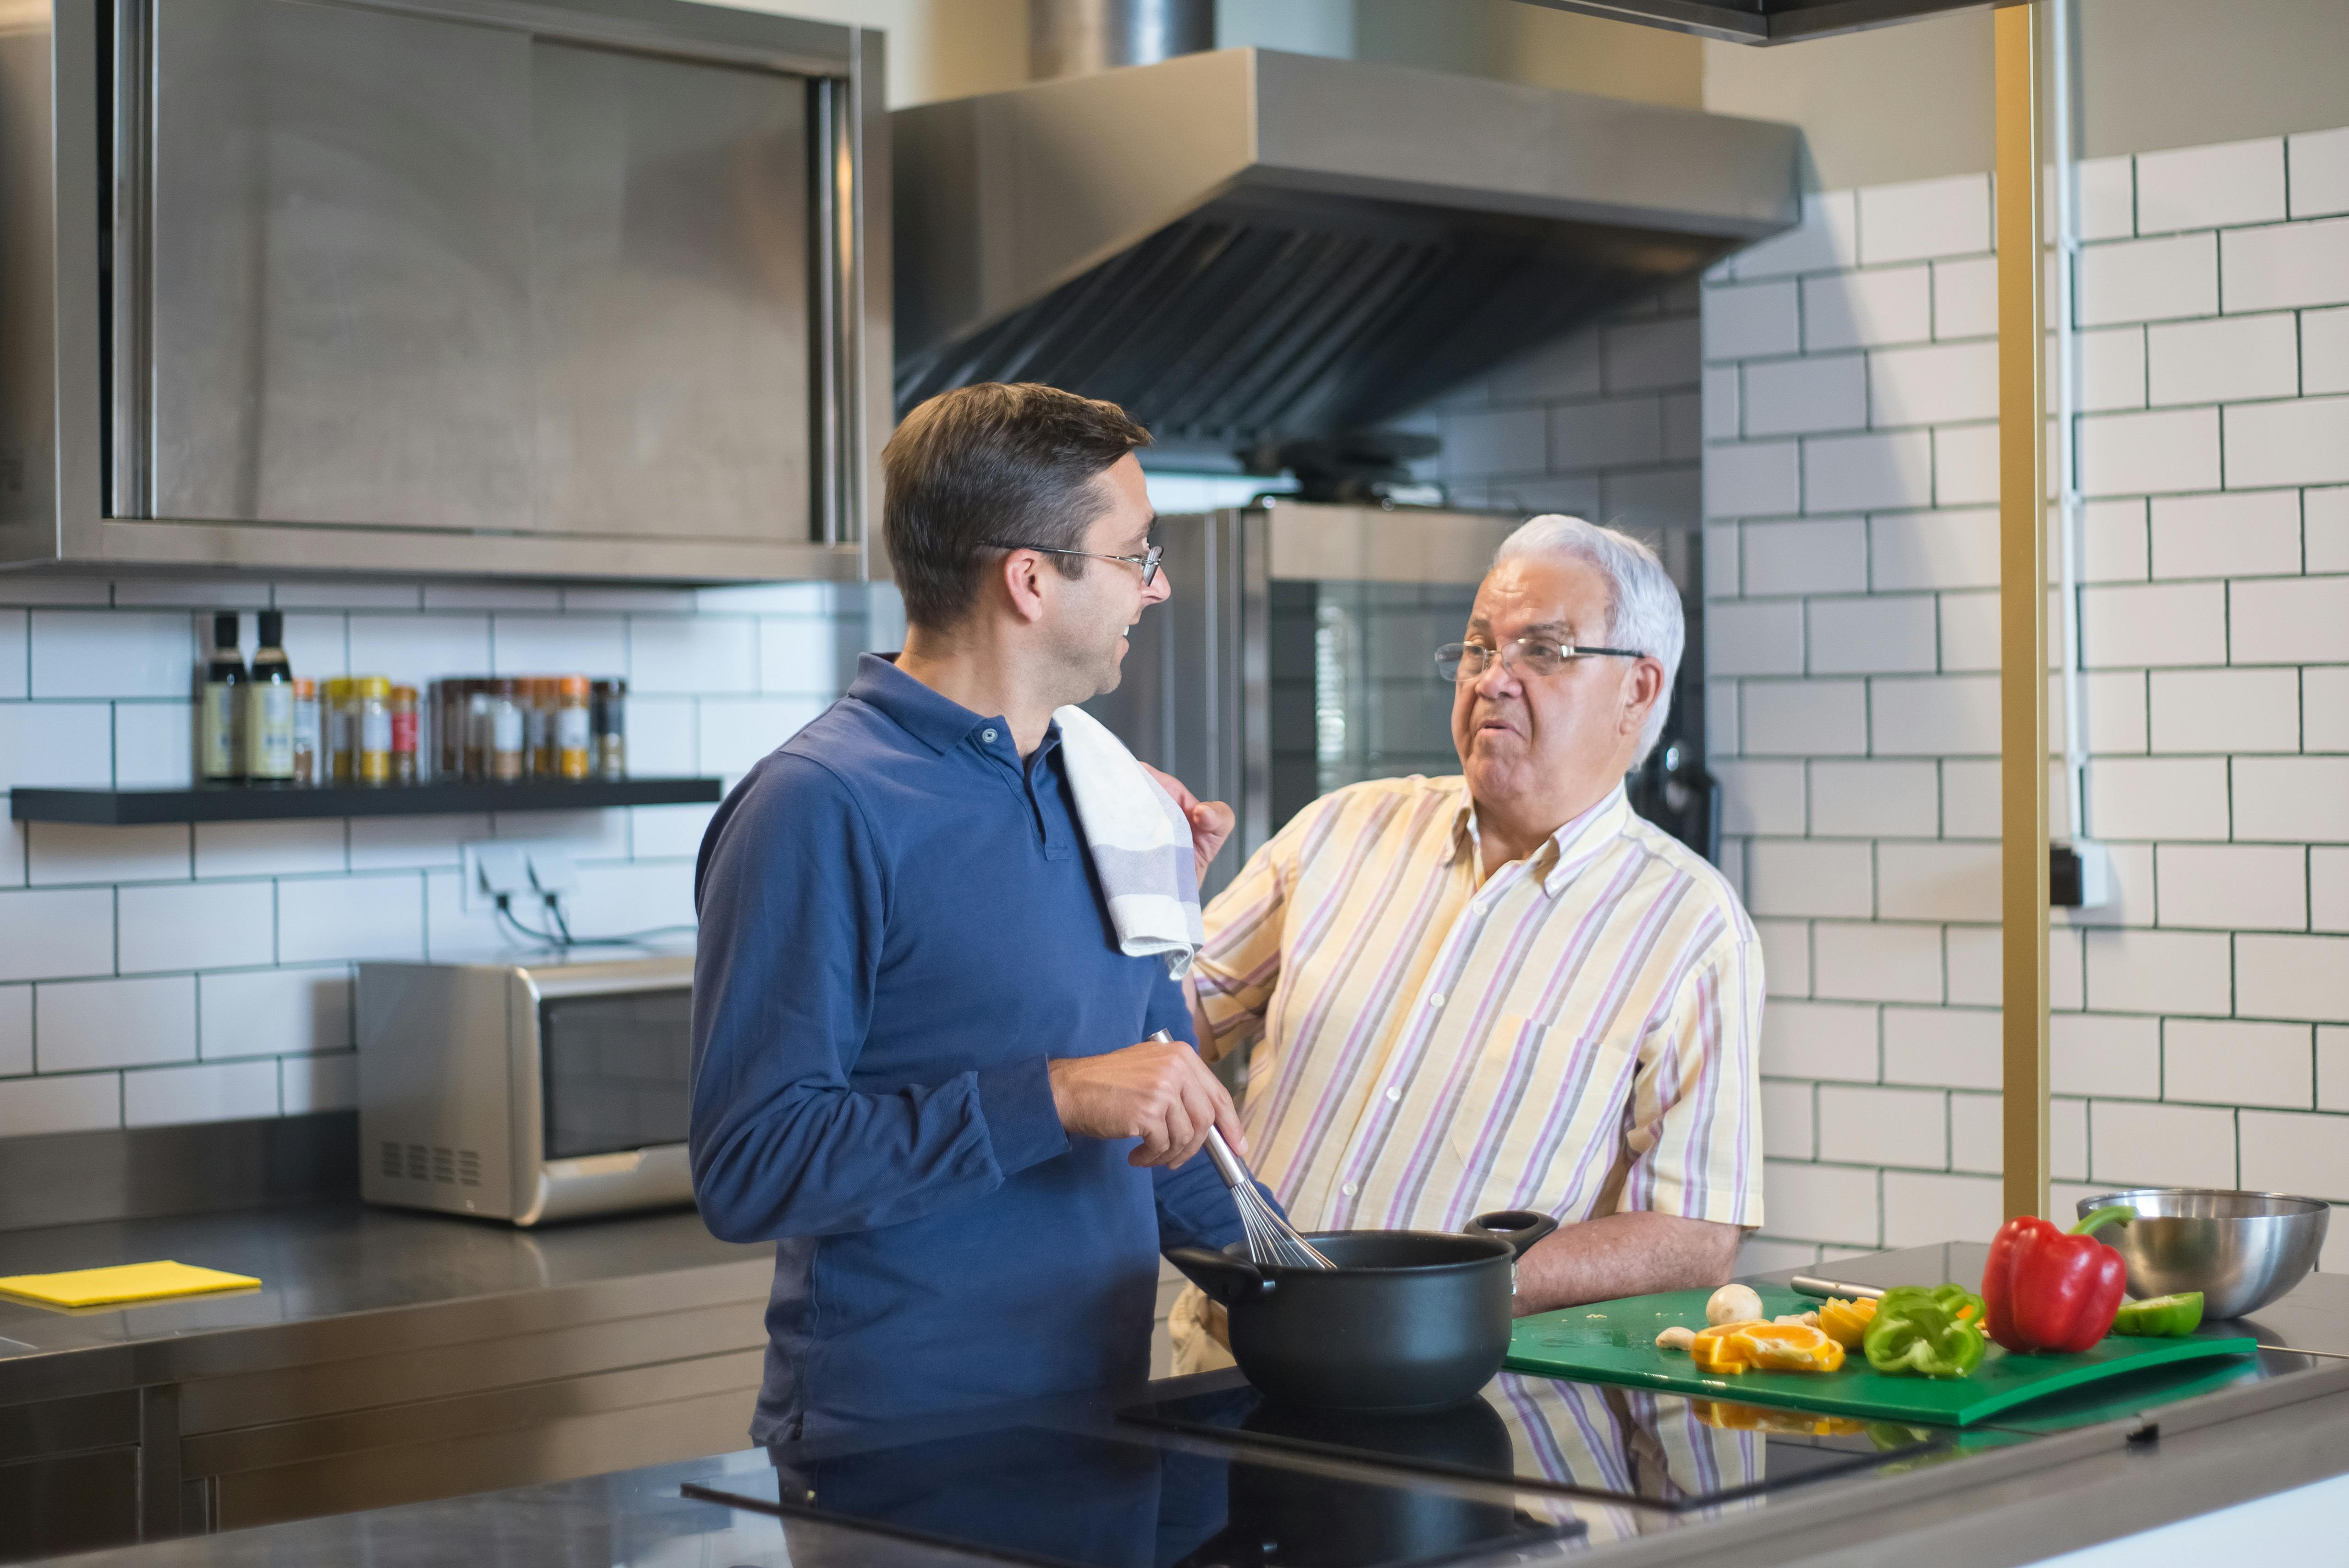 Men talking in the kitchen | Source: Pexels